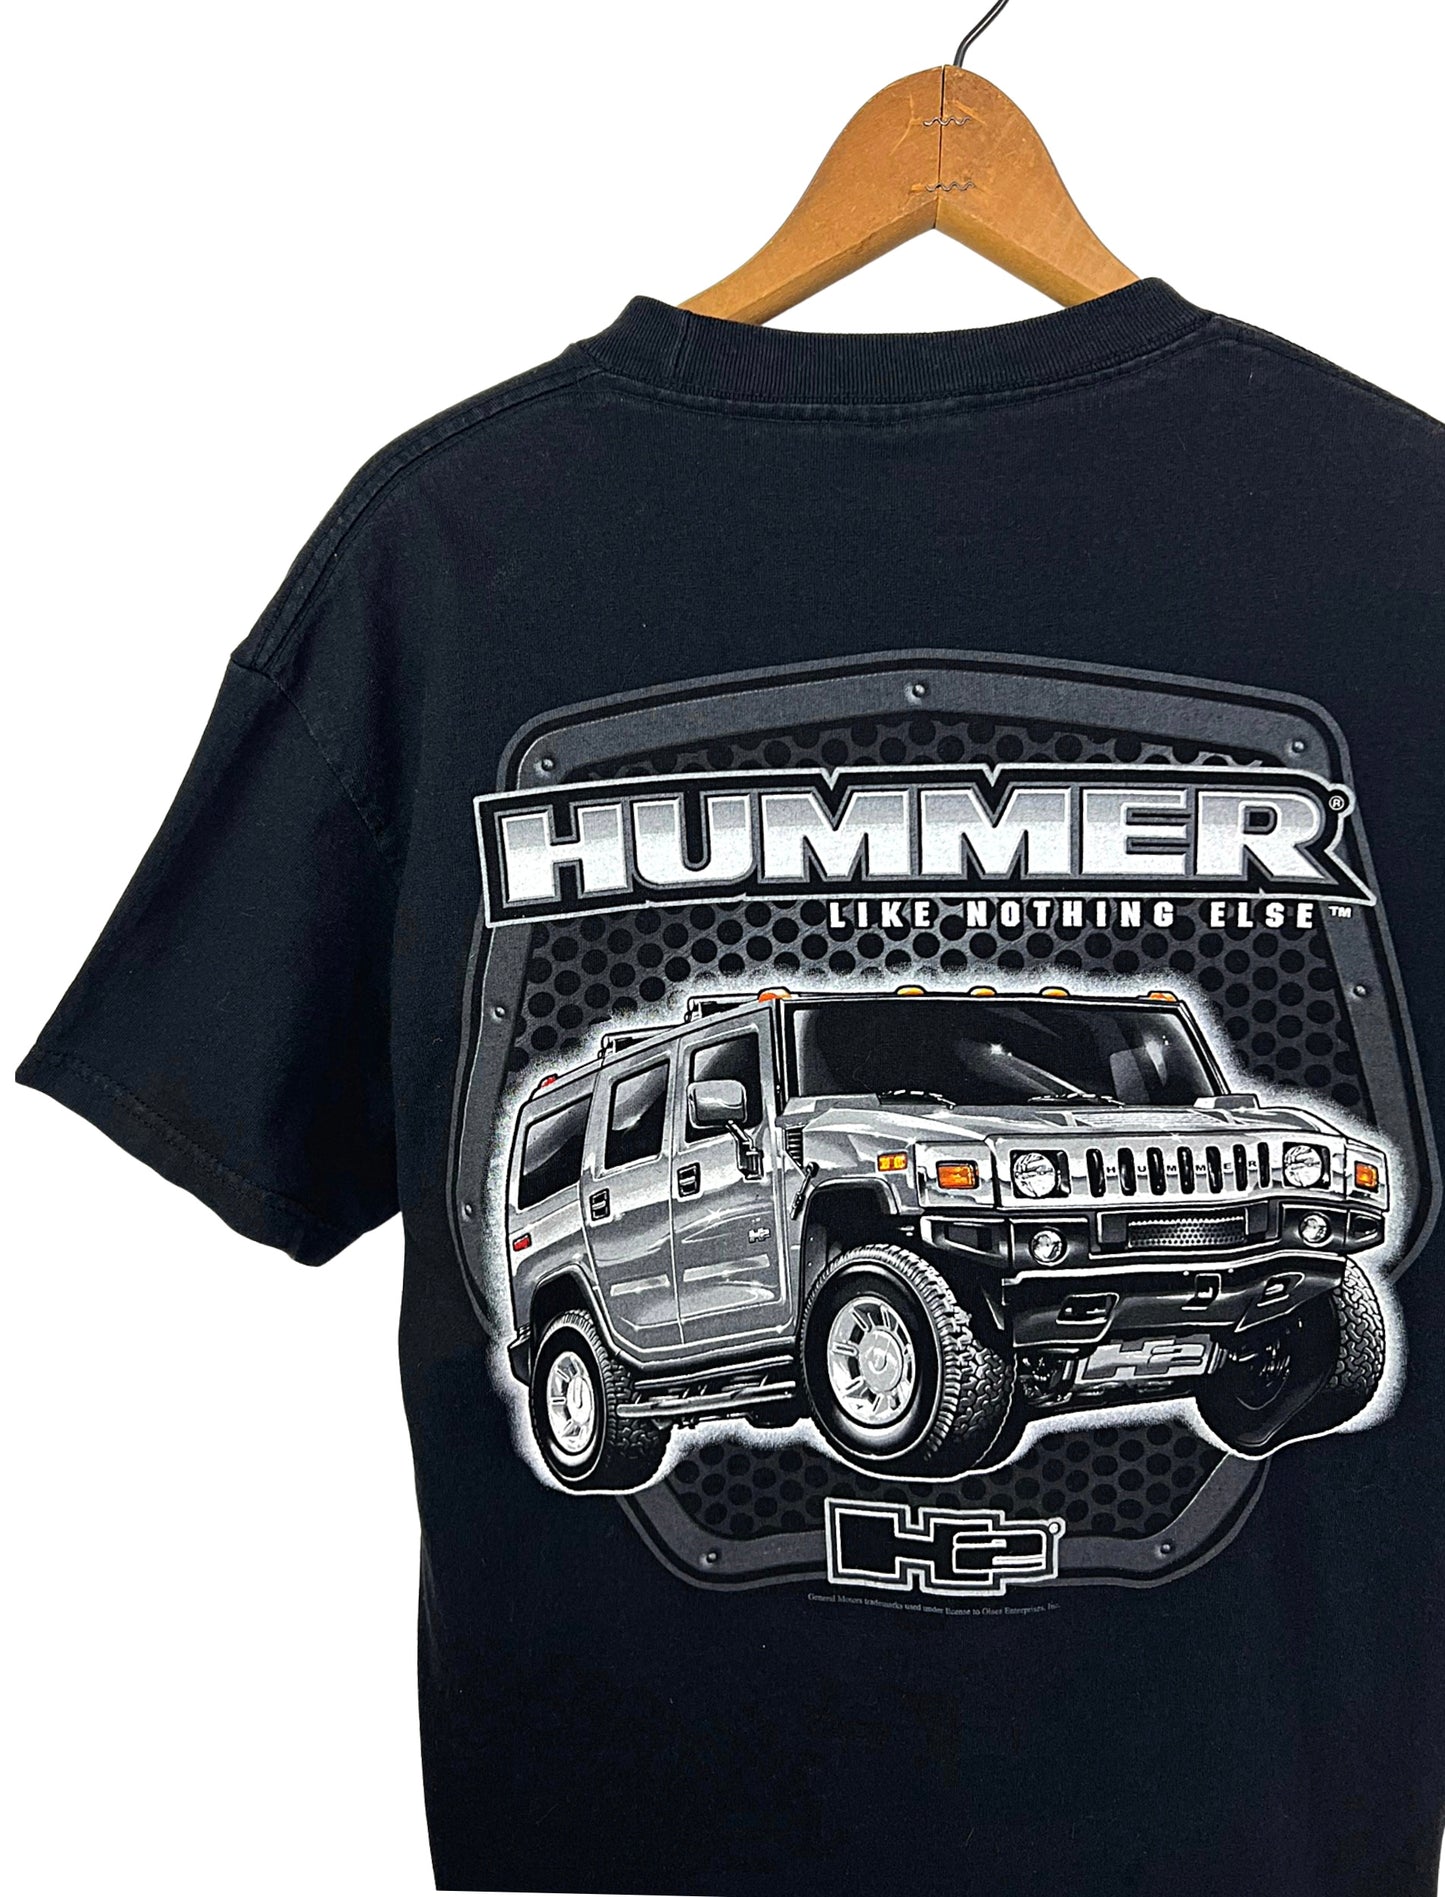 2003 Hummer H2 “Like No Other” T-shirt Size Medium